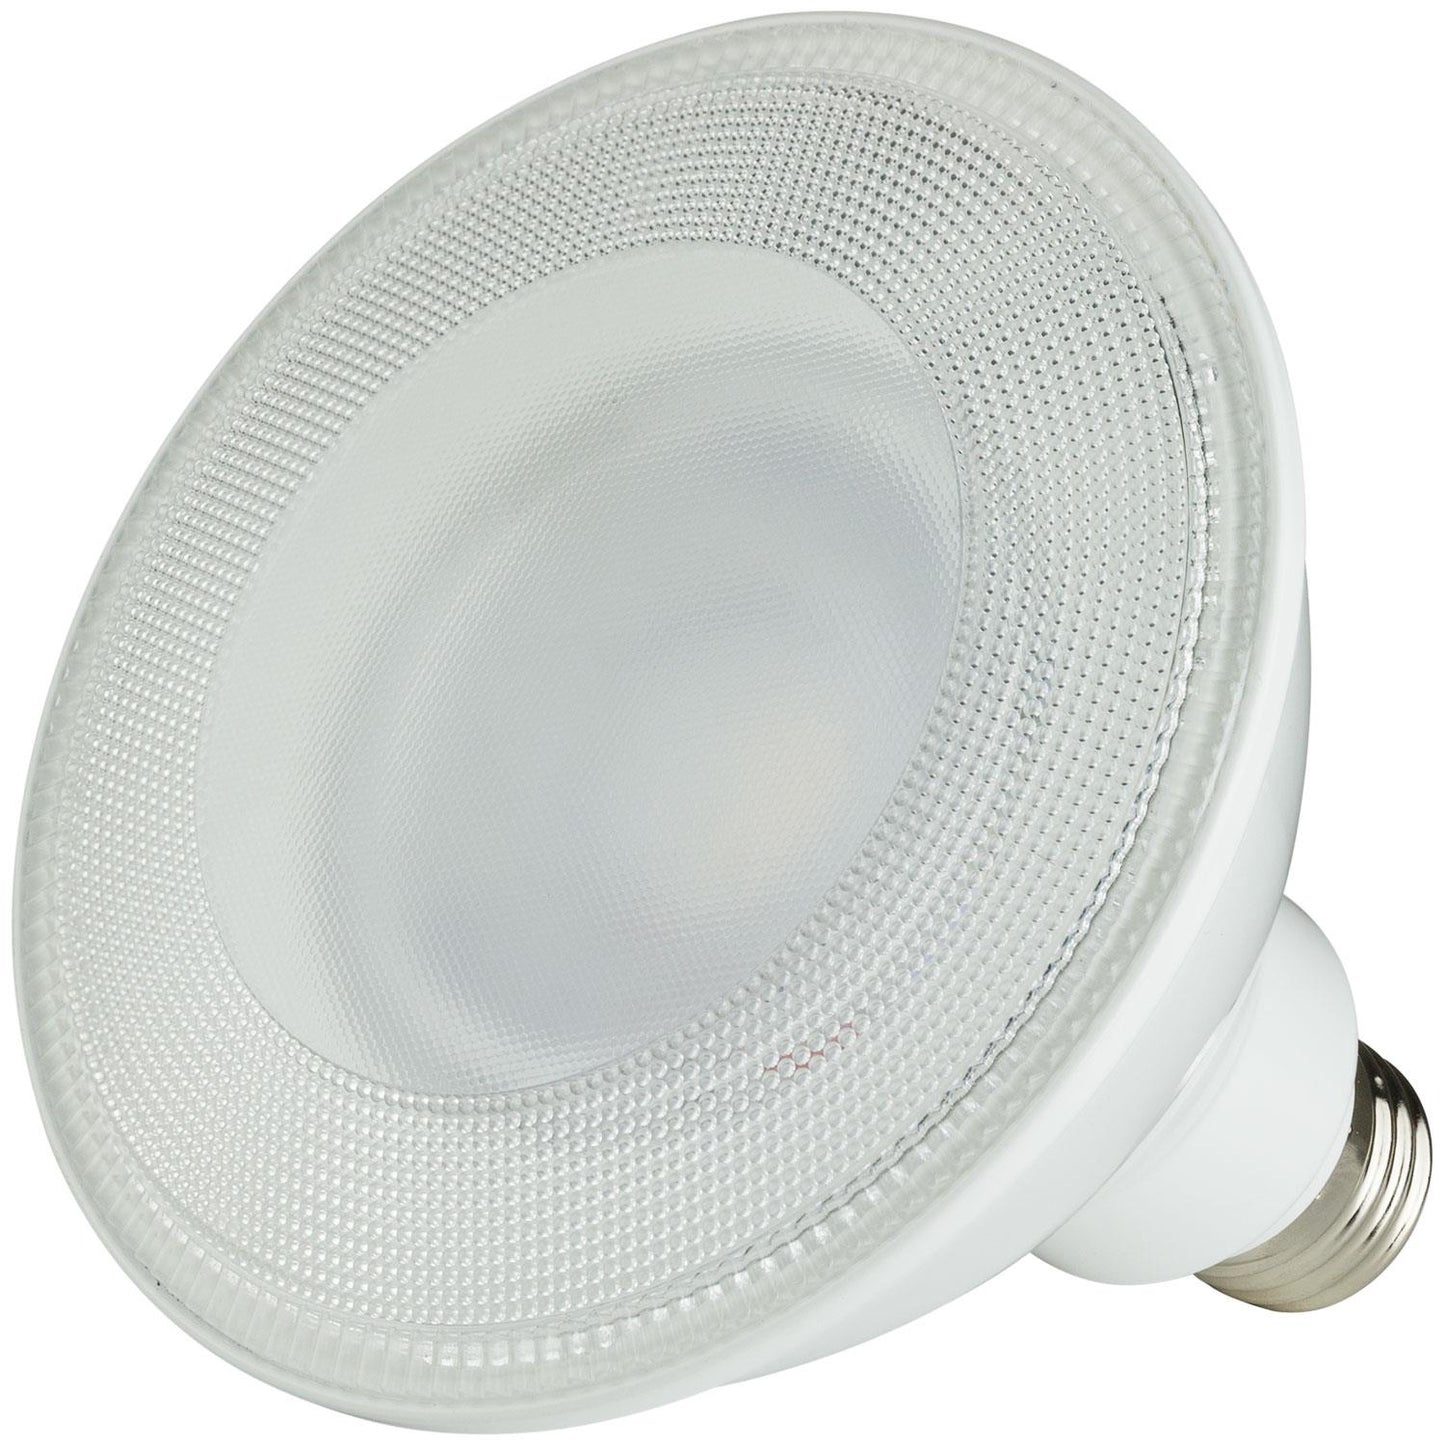 Sunlite LED PAR38 Reflector HE Series 17.5W (85W Equivalent) Light Bulb Medium (E26) Base, Warm White